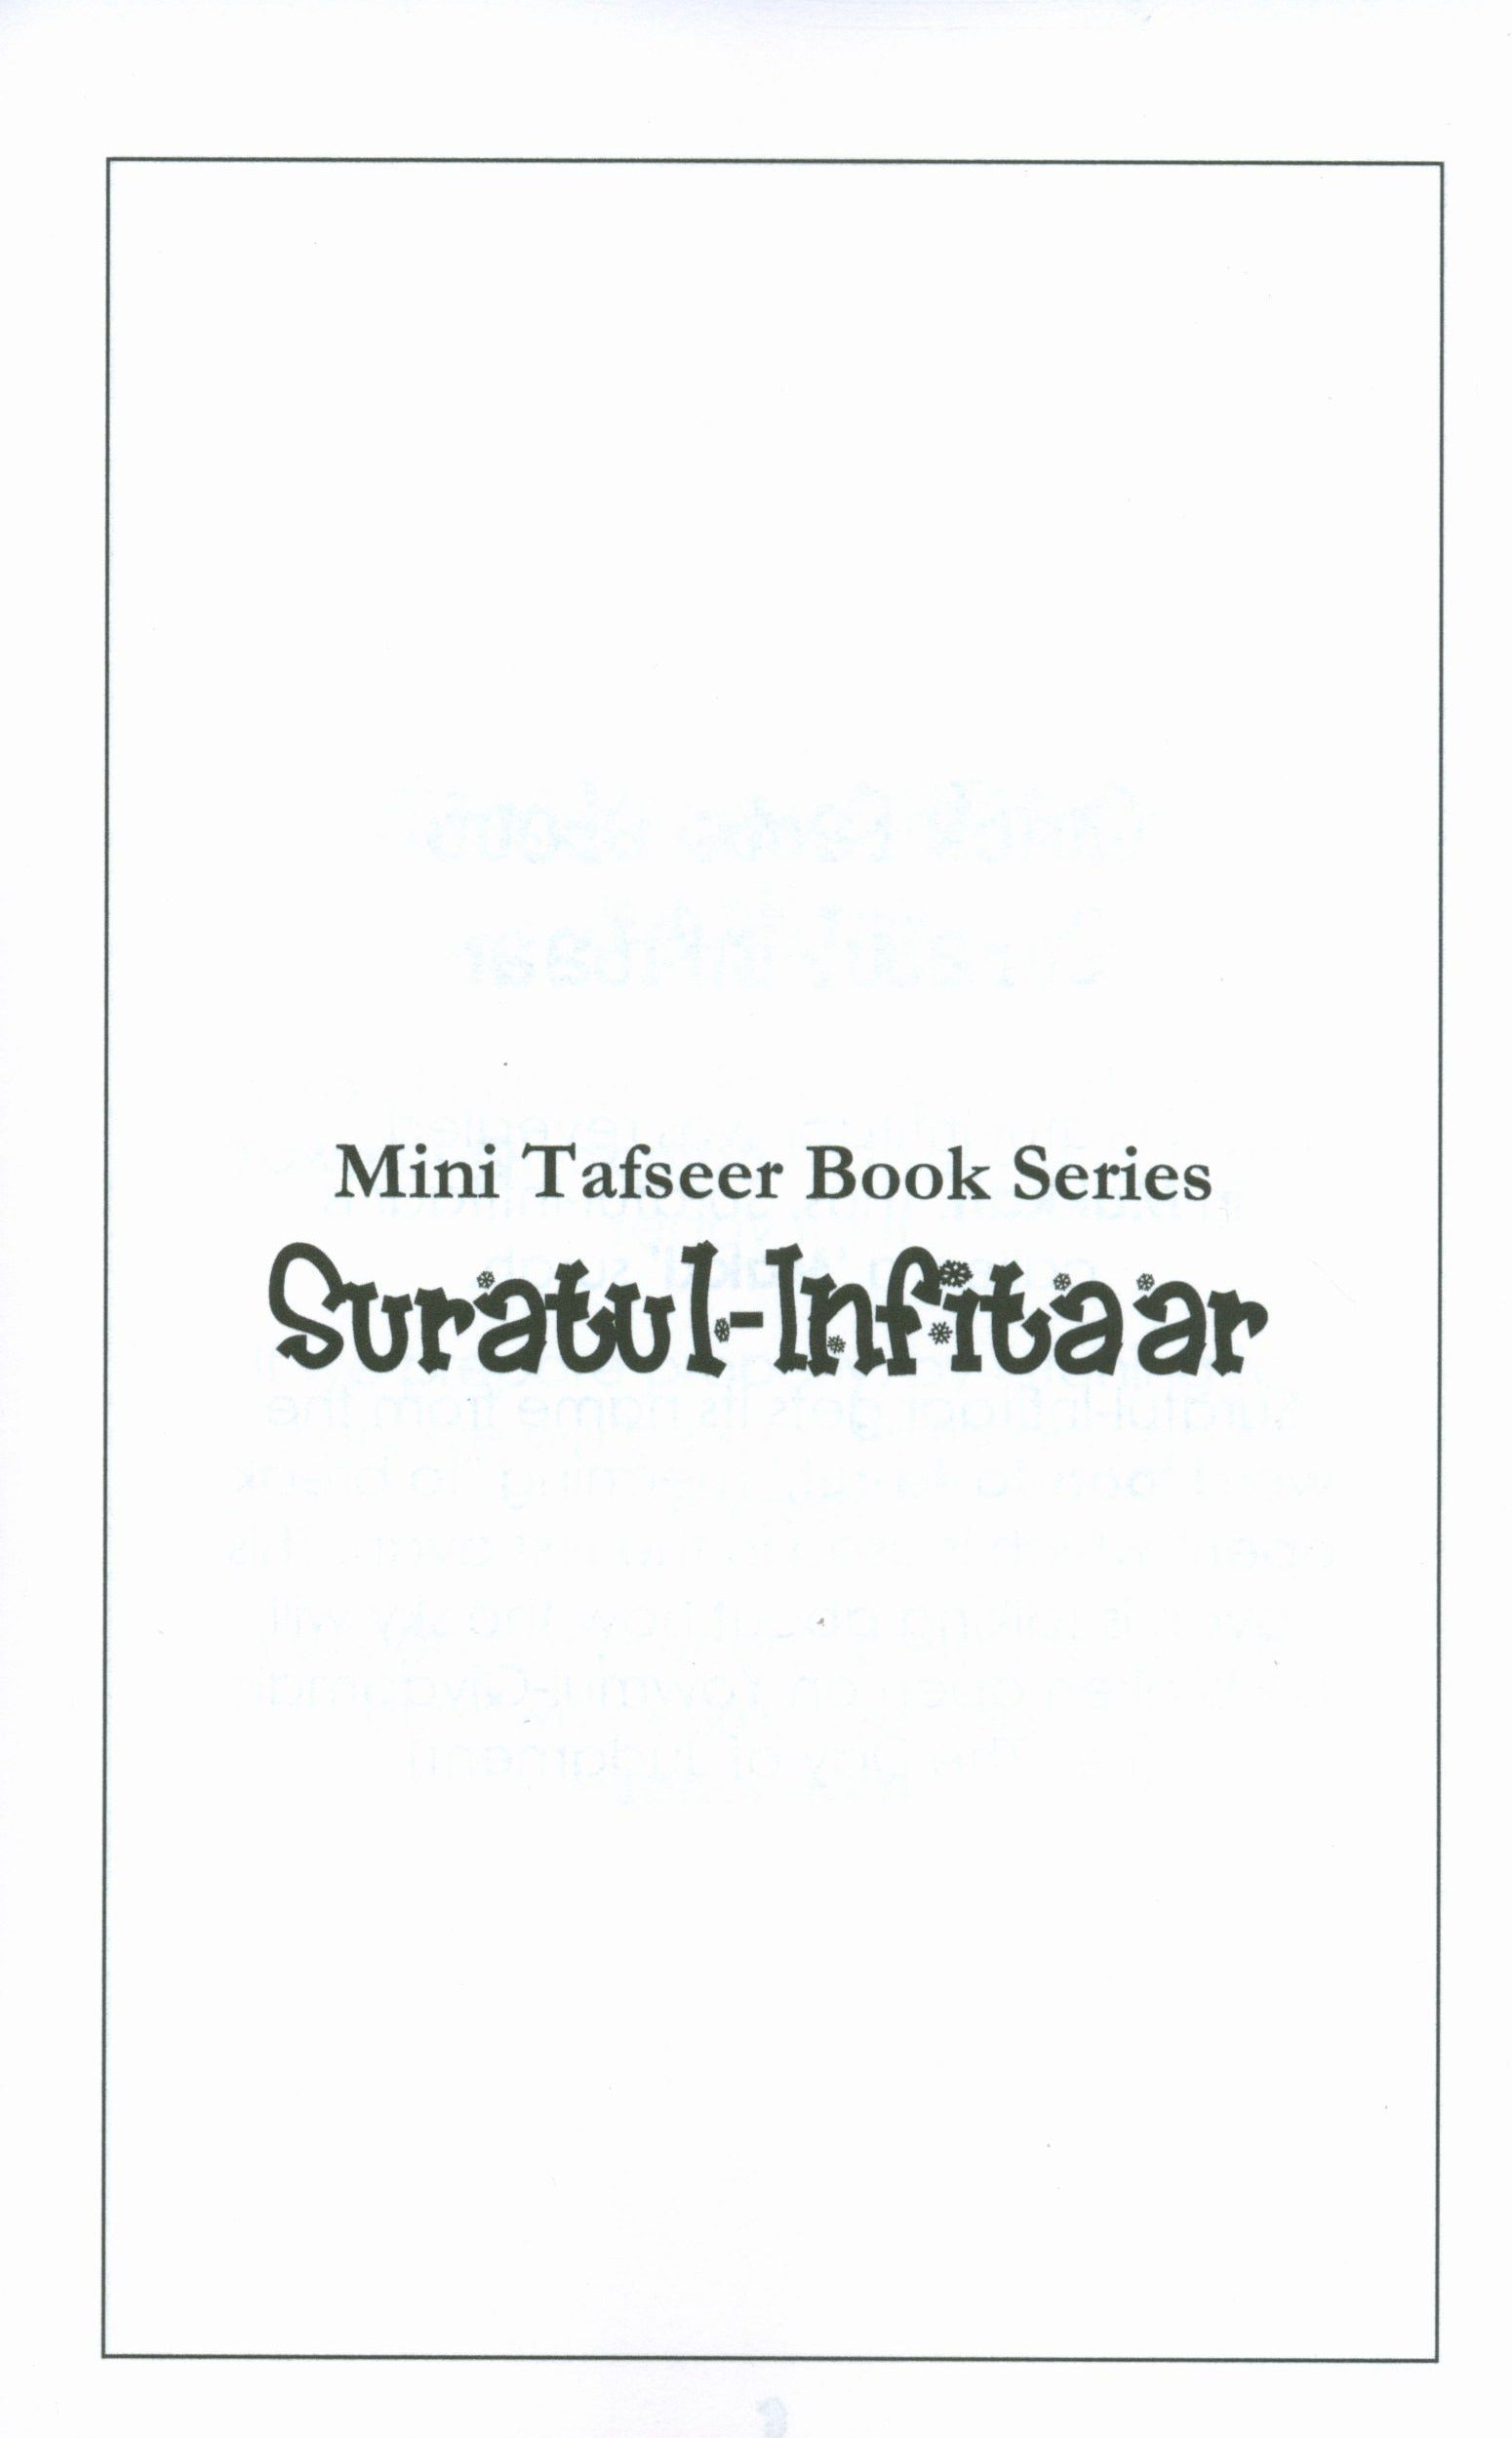 Mini Tafseer Book Suratul Infitaar (Surah 82)